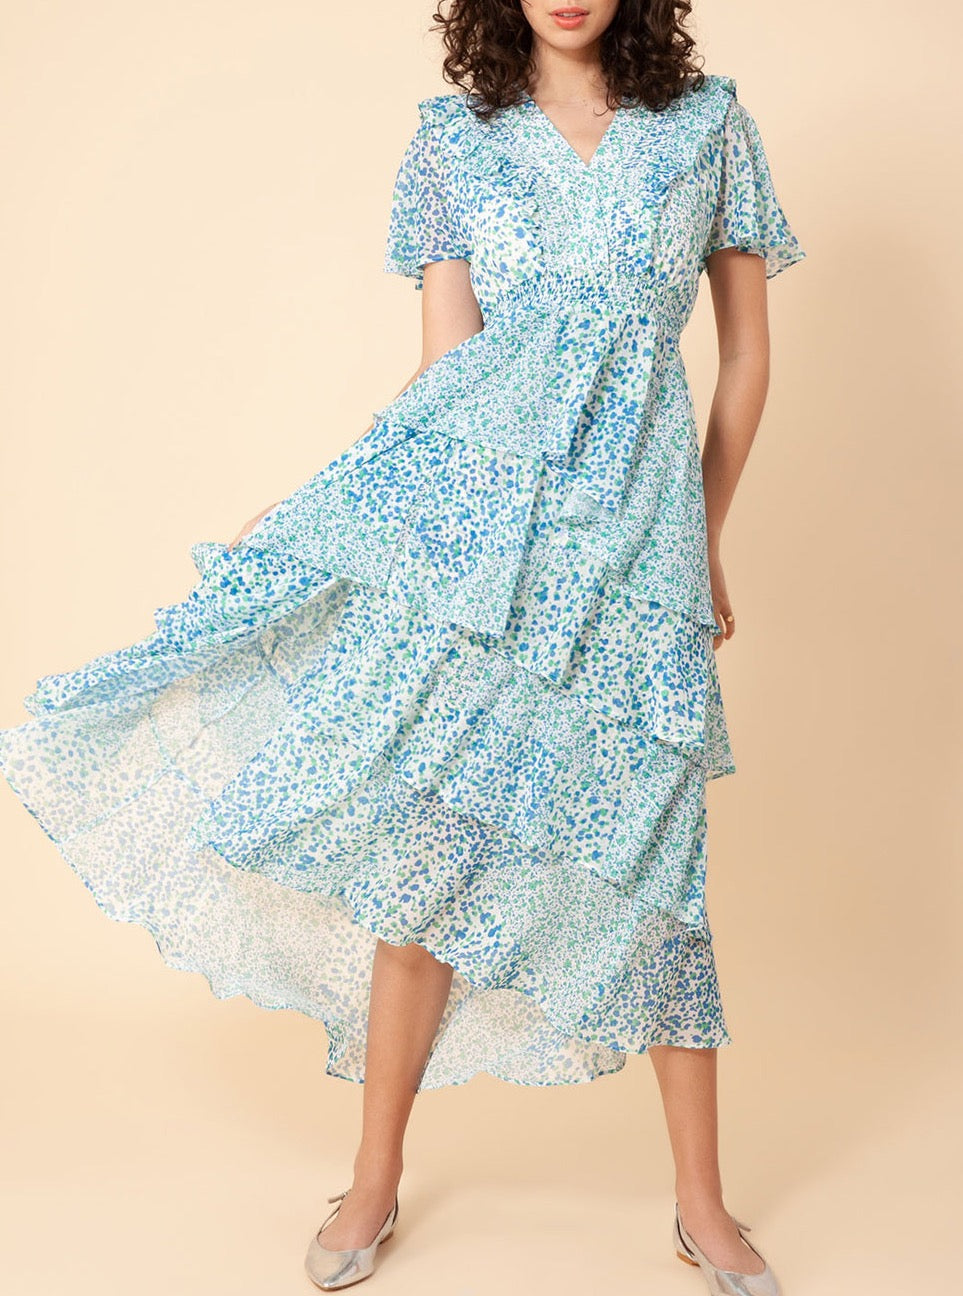 Hale Bob Sania Maxi Dress - Size XS Available